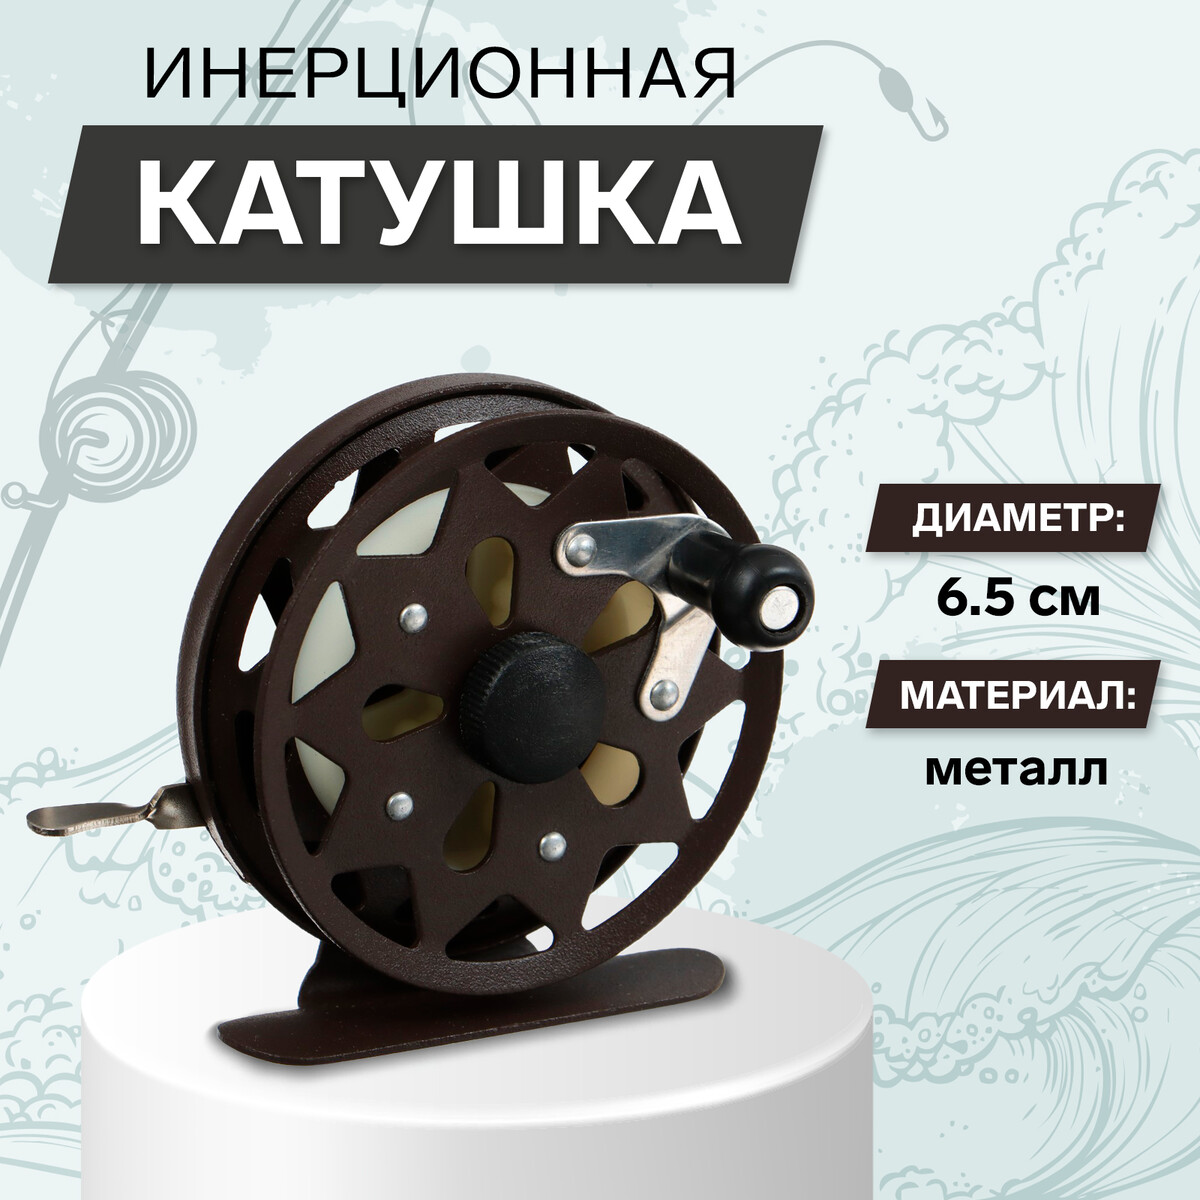 Катушка инерционная, металл, диаметр 6.5 см, цвет темно-коричневый,tl65 костер руиз диаметр 10 см коричневый